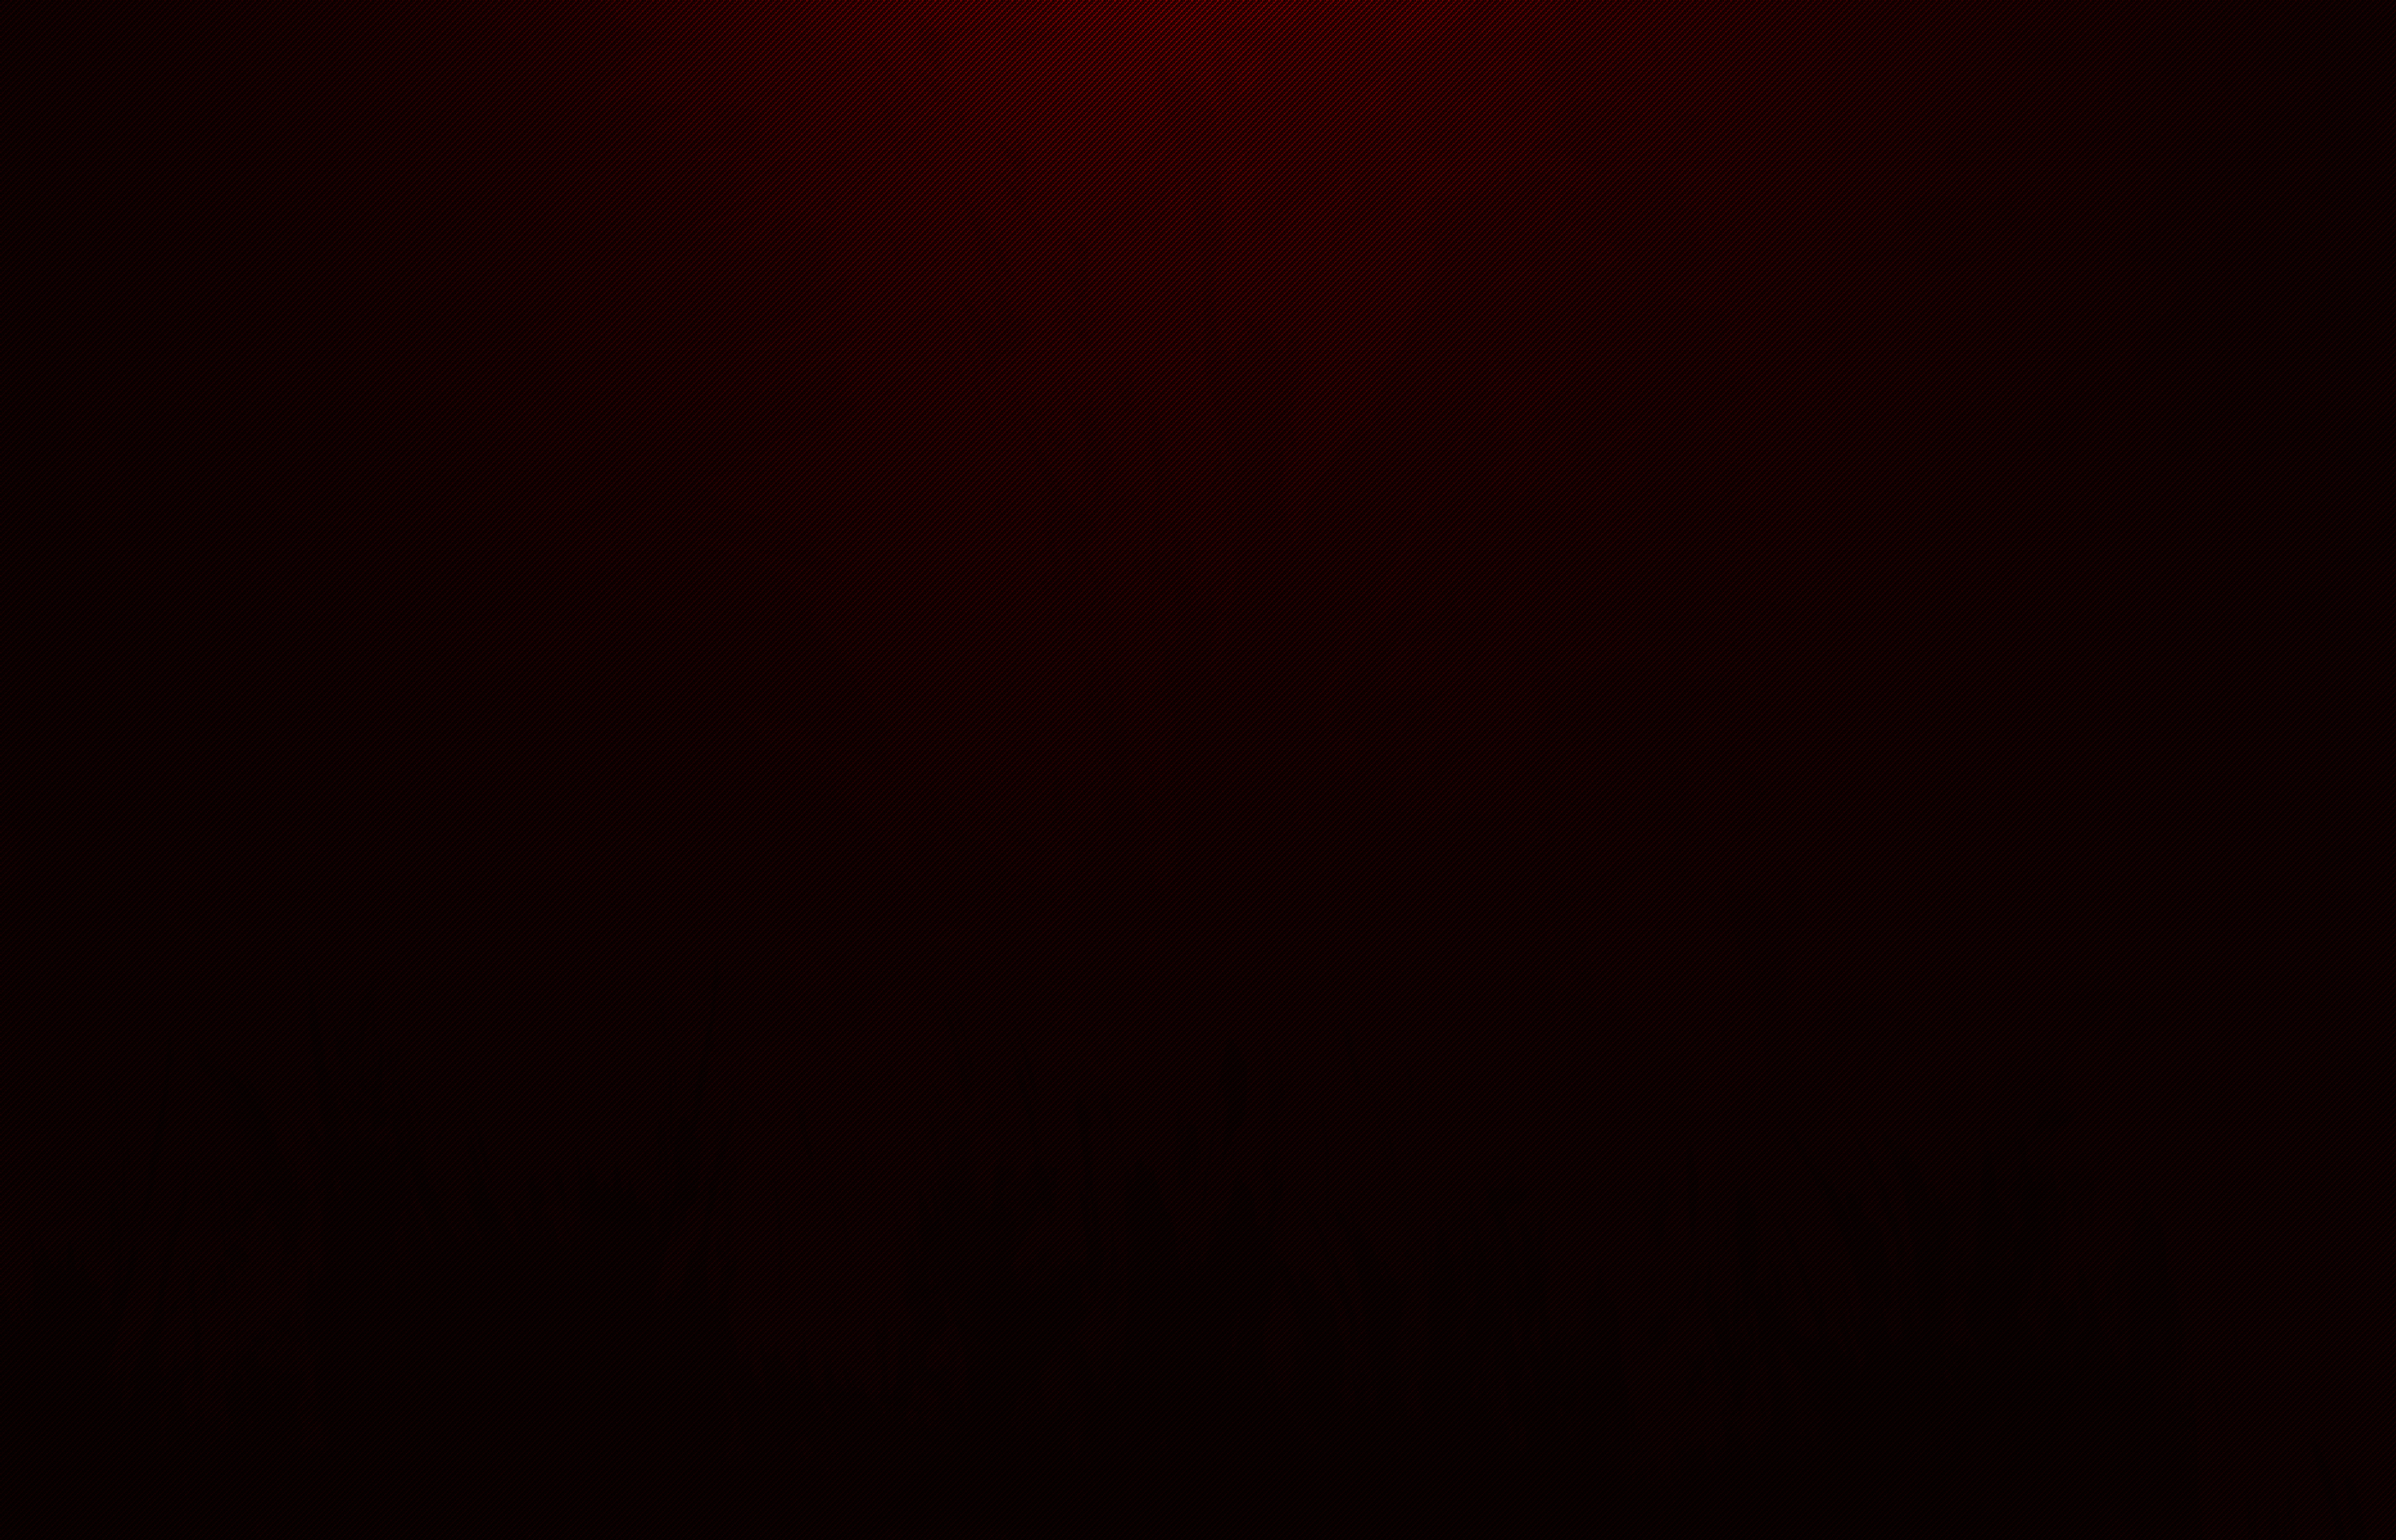 Dark Red Wallpaper / Download Dark Red Wallpaper 1600x1200 | Wallpoper #279603 - Dark red